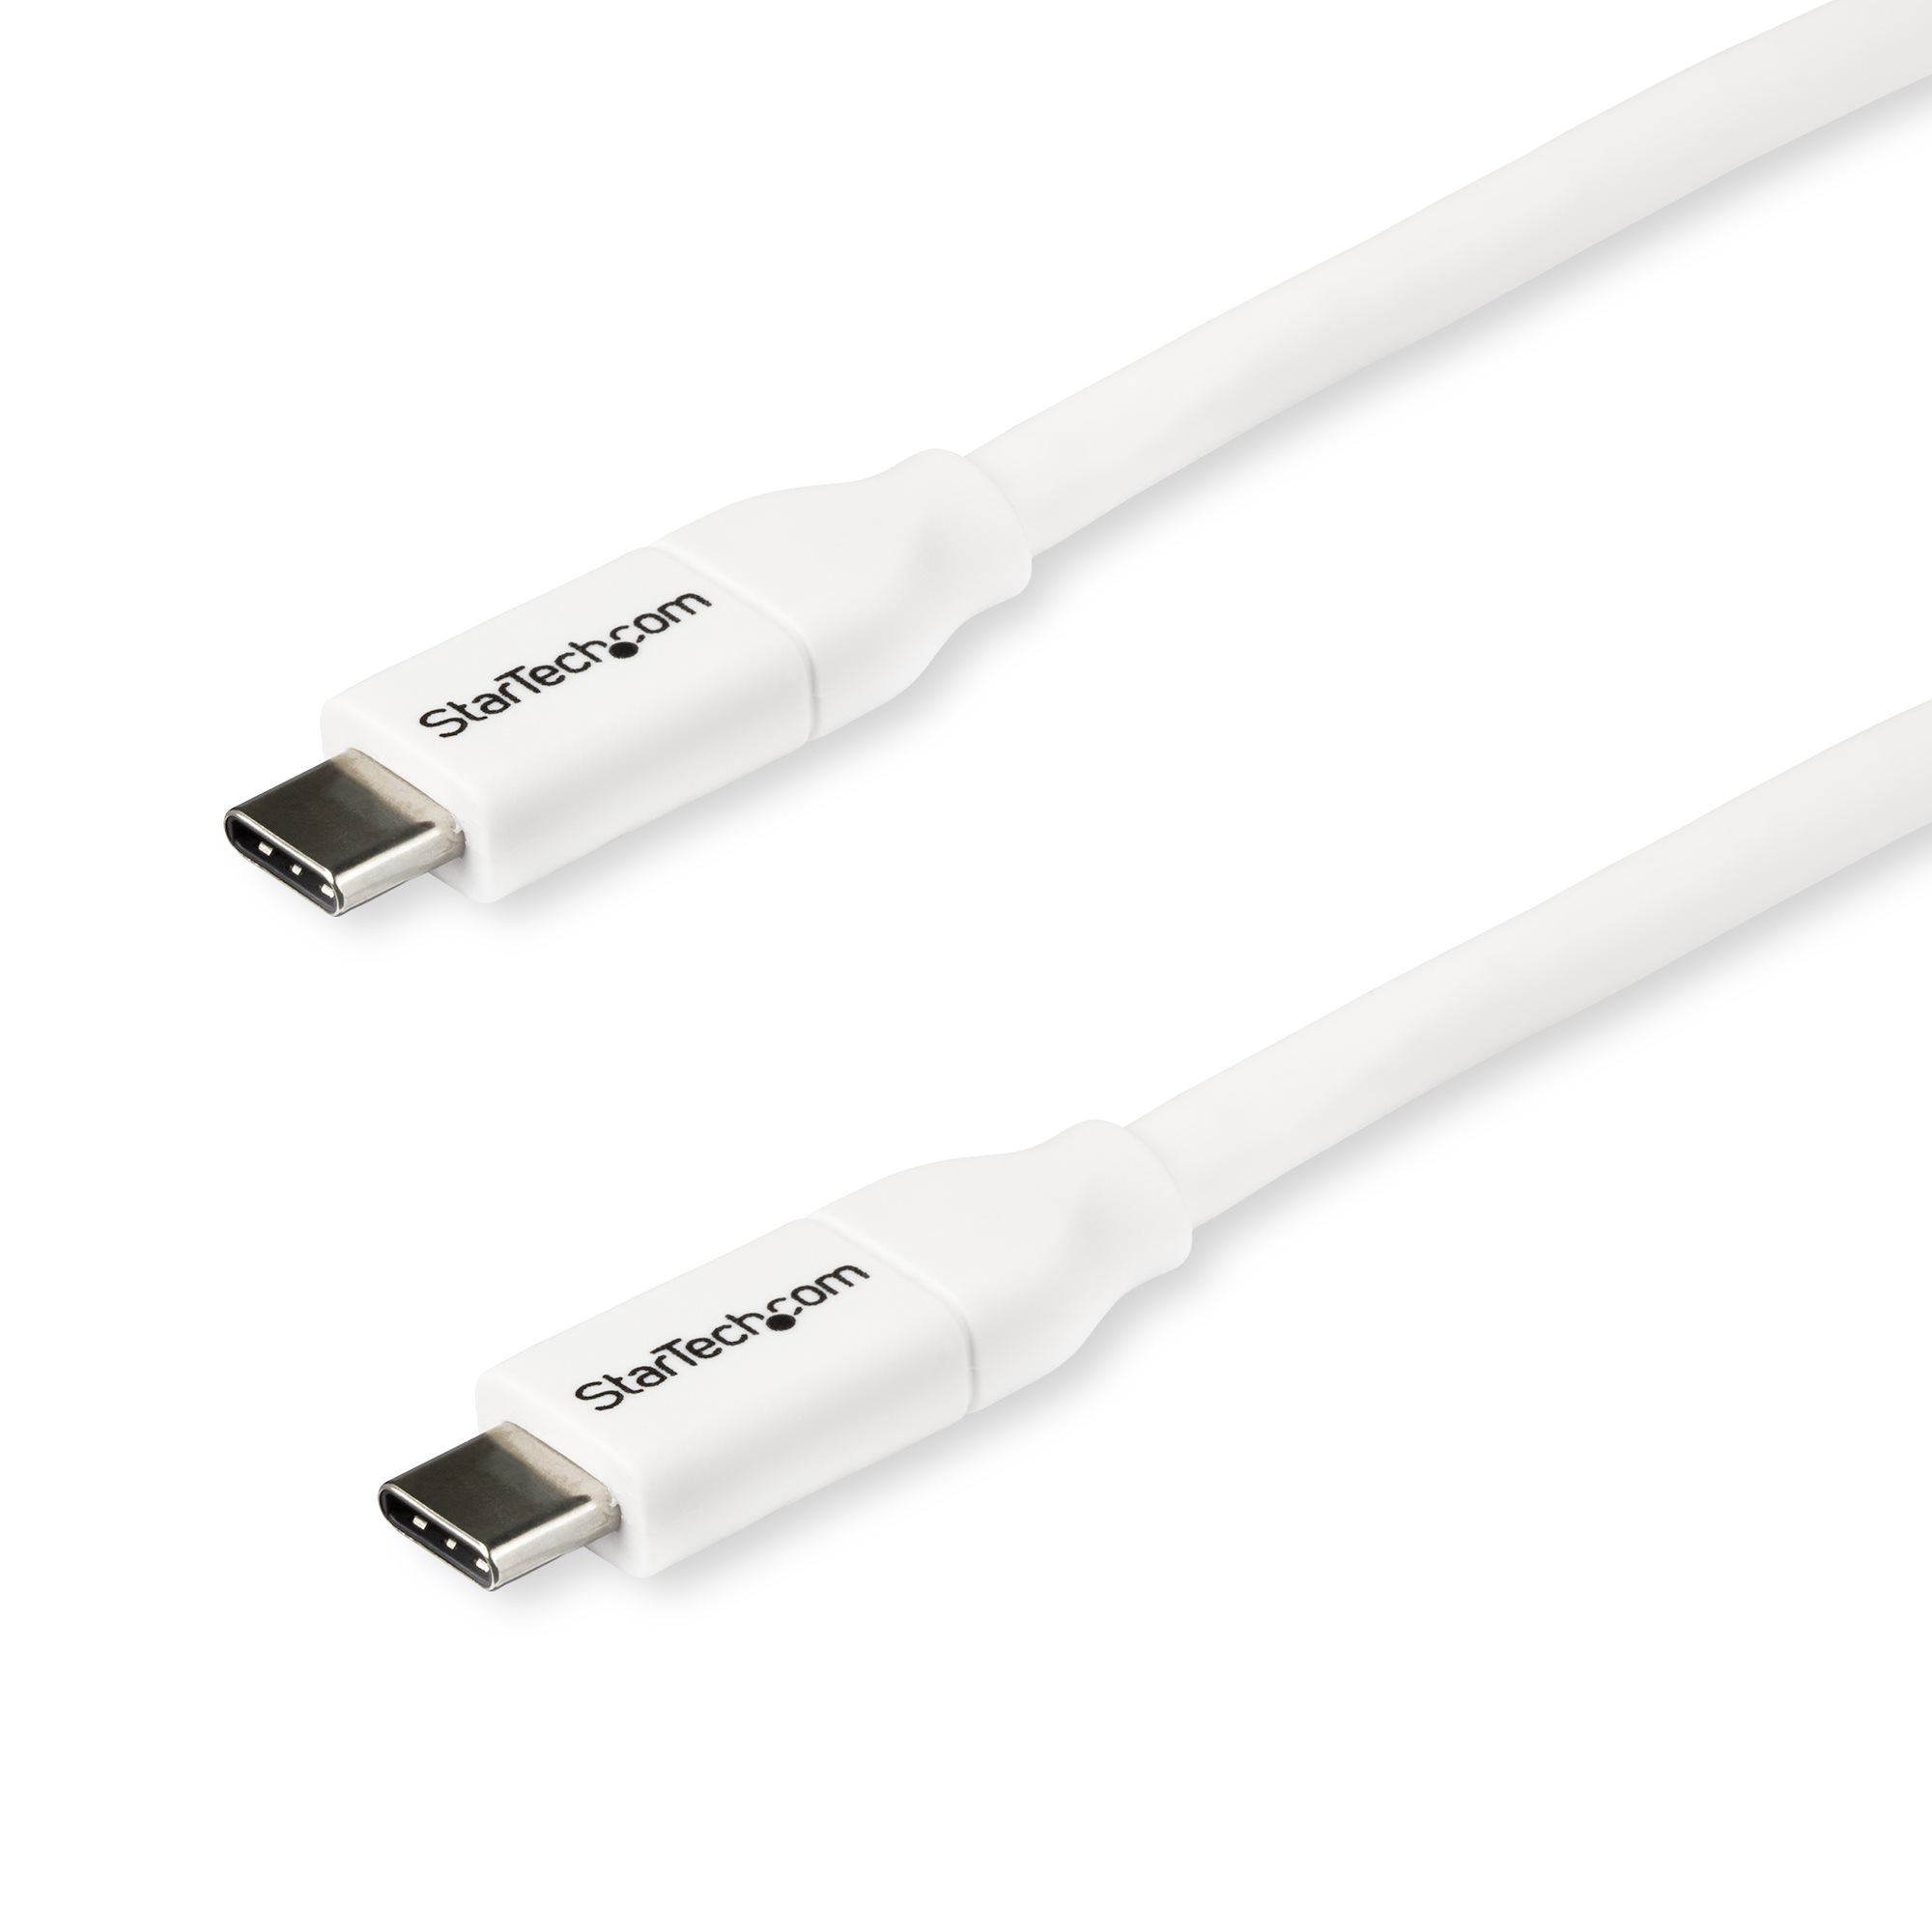 StarTech.com Câble Lightning vers USB-C de 1 m en blanc - Cértifié